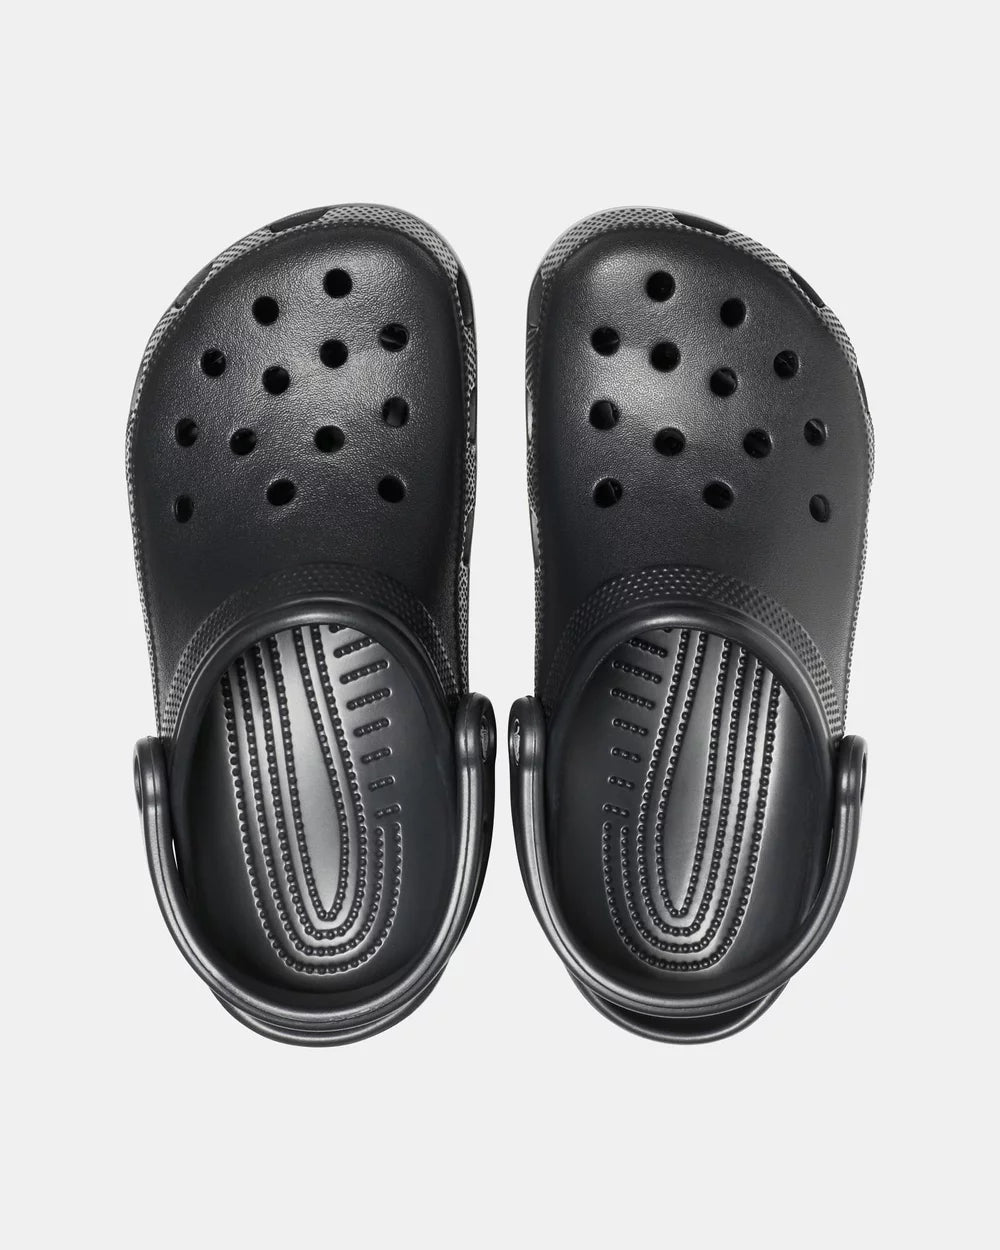 Crocs Classic Black Waterproof Shoes Comfy 